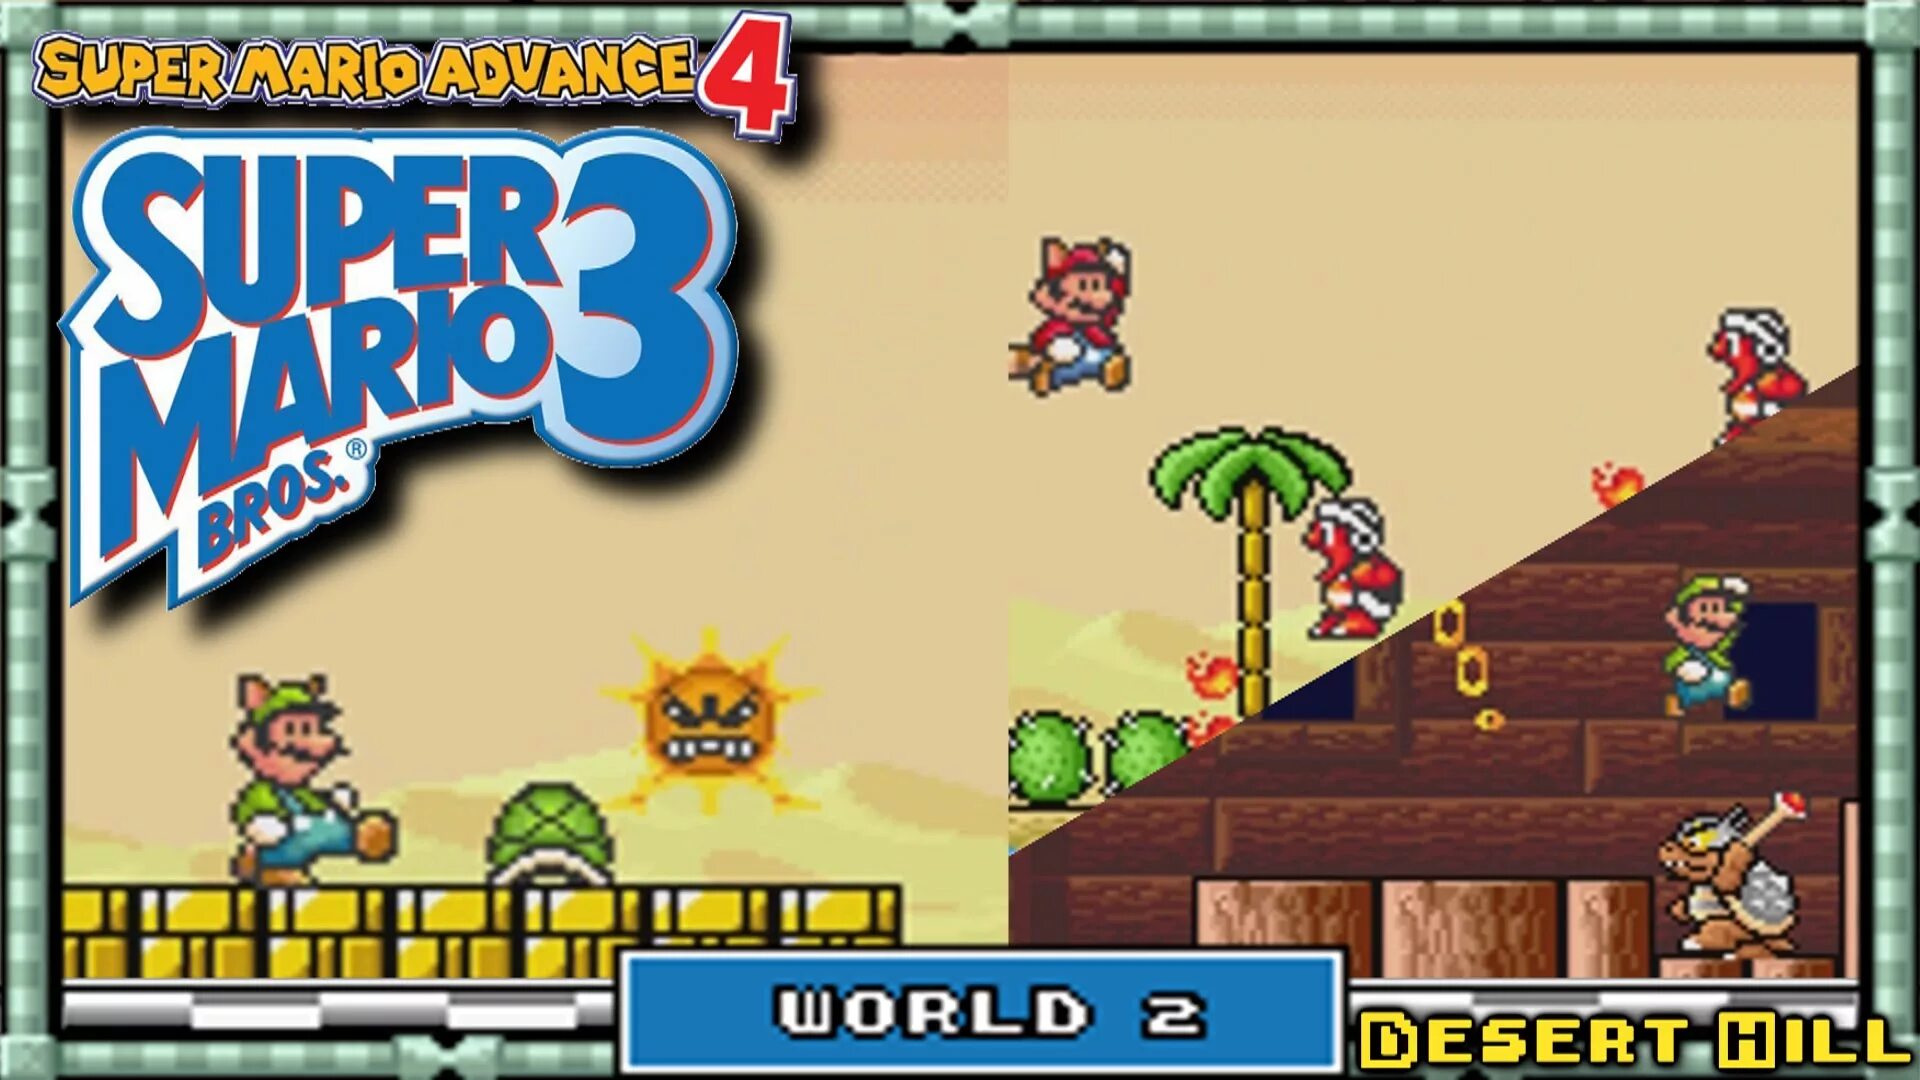 Super Mario World: super Mario Bros. 4. Марио БРОС 3. Супер Марио адванс 3 супер Марио 3. Супер Марио адванс 4.